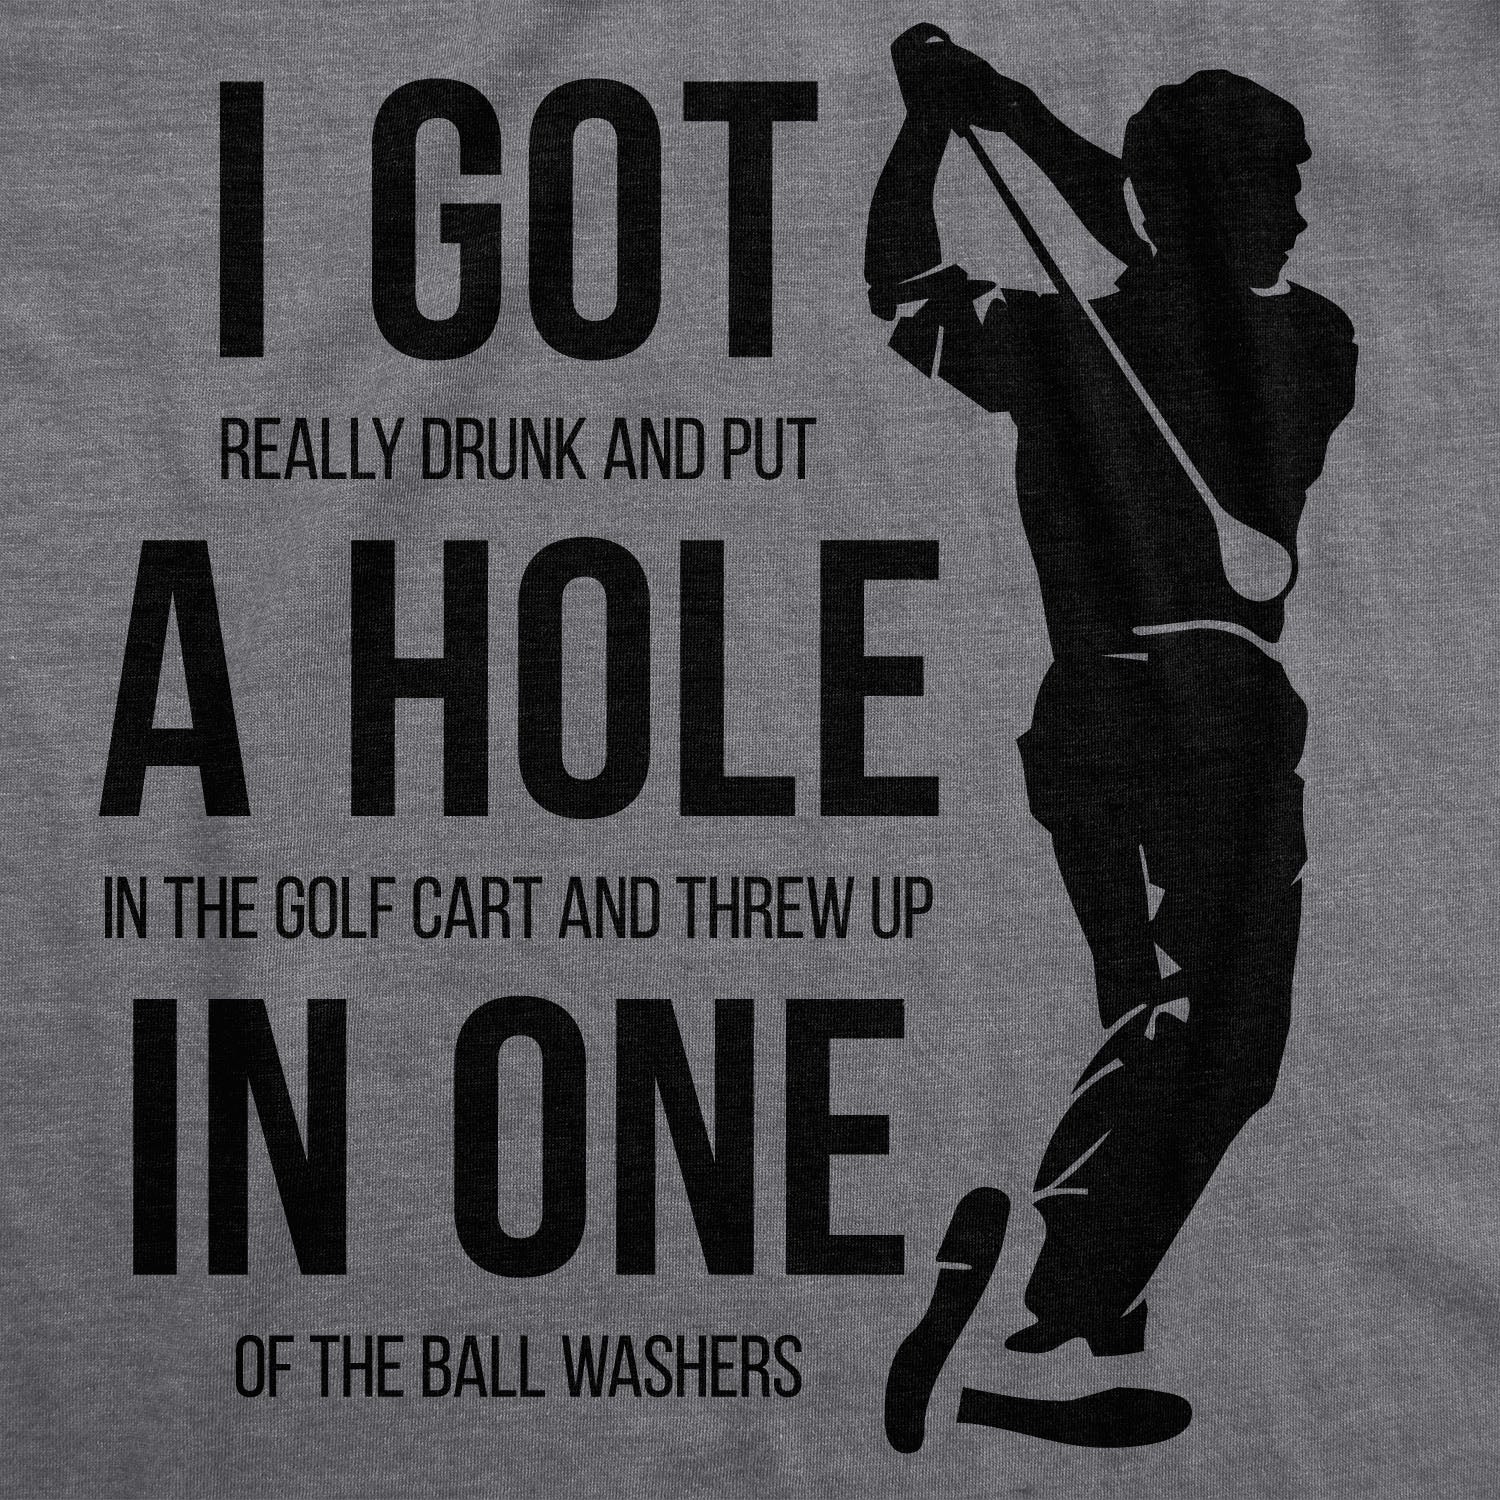 Funny Dark Heather Grey - Hole in One I Got a Hole in One Mens T Shirt Nerdy Golf drinking Tee